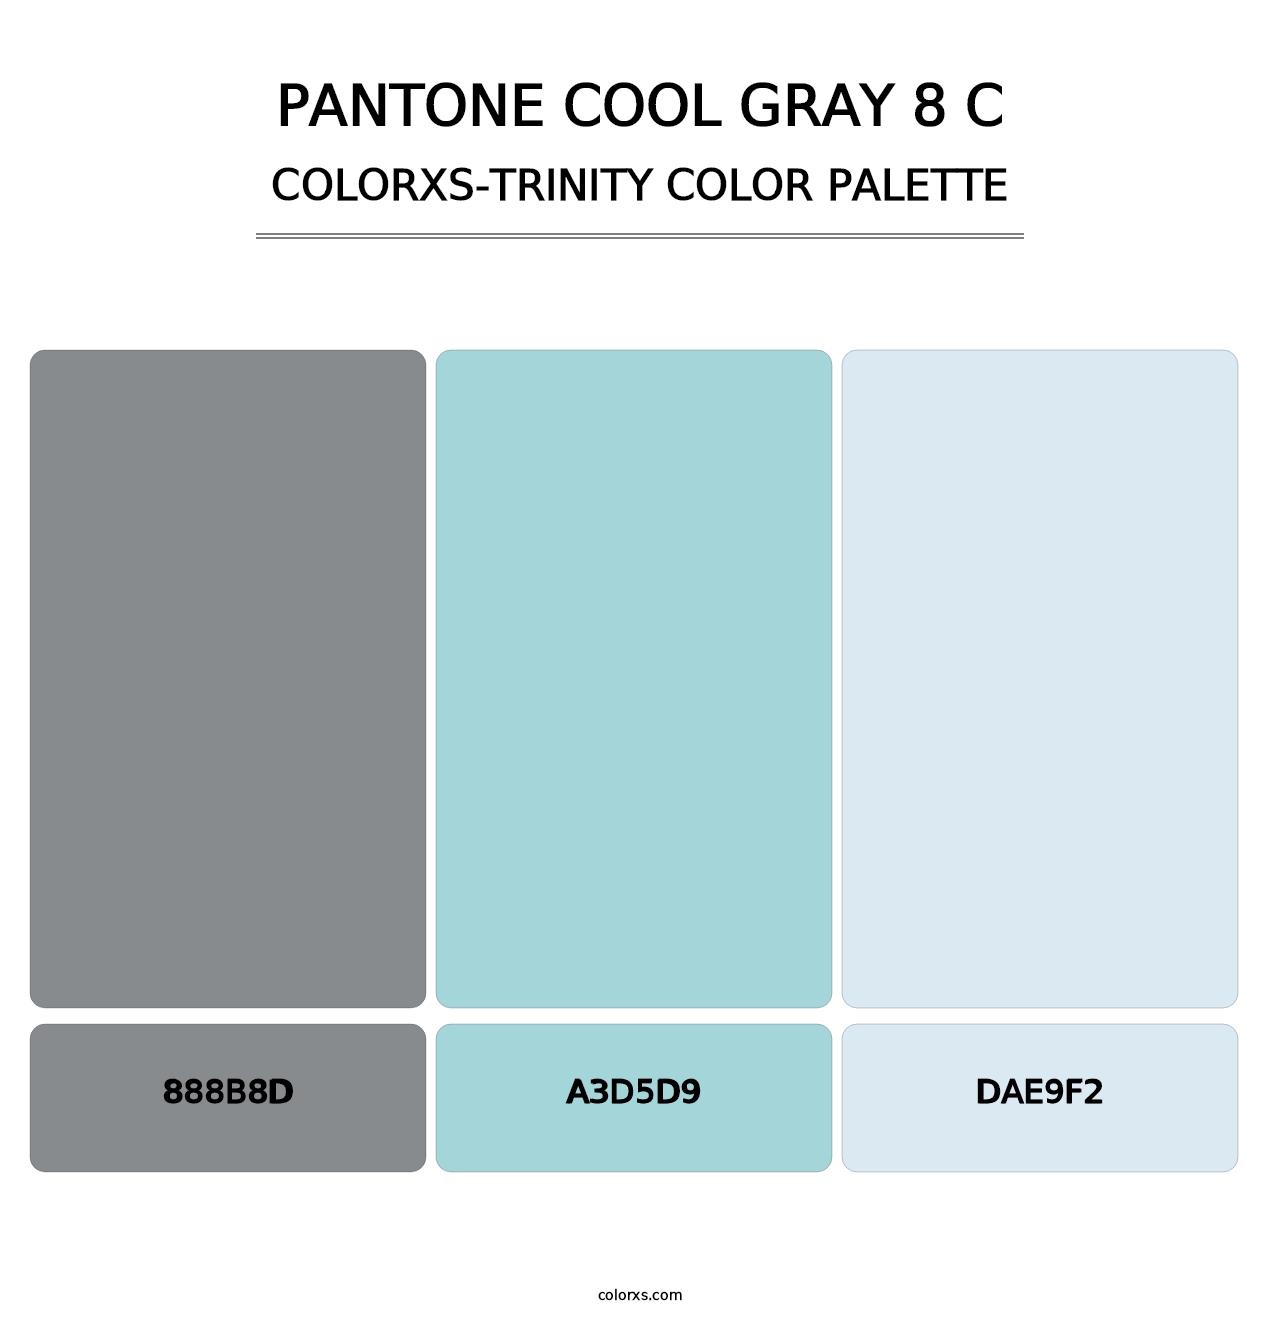 PANTONE Cool Gray 8 C - Colorxs Trinity Palette